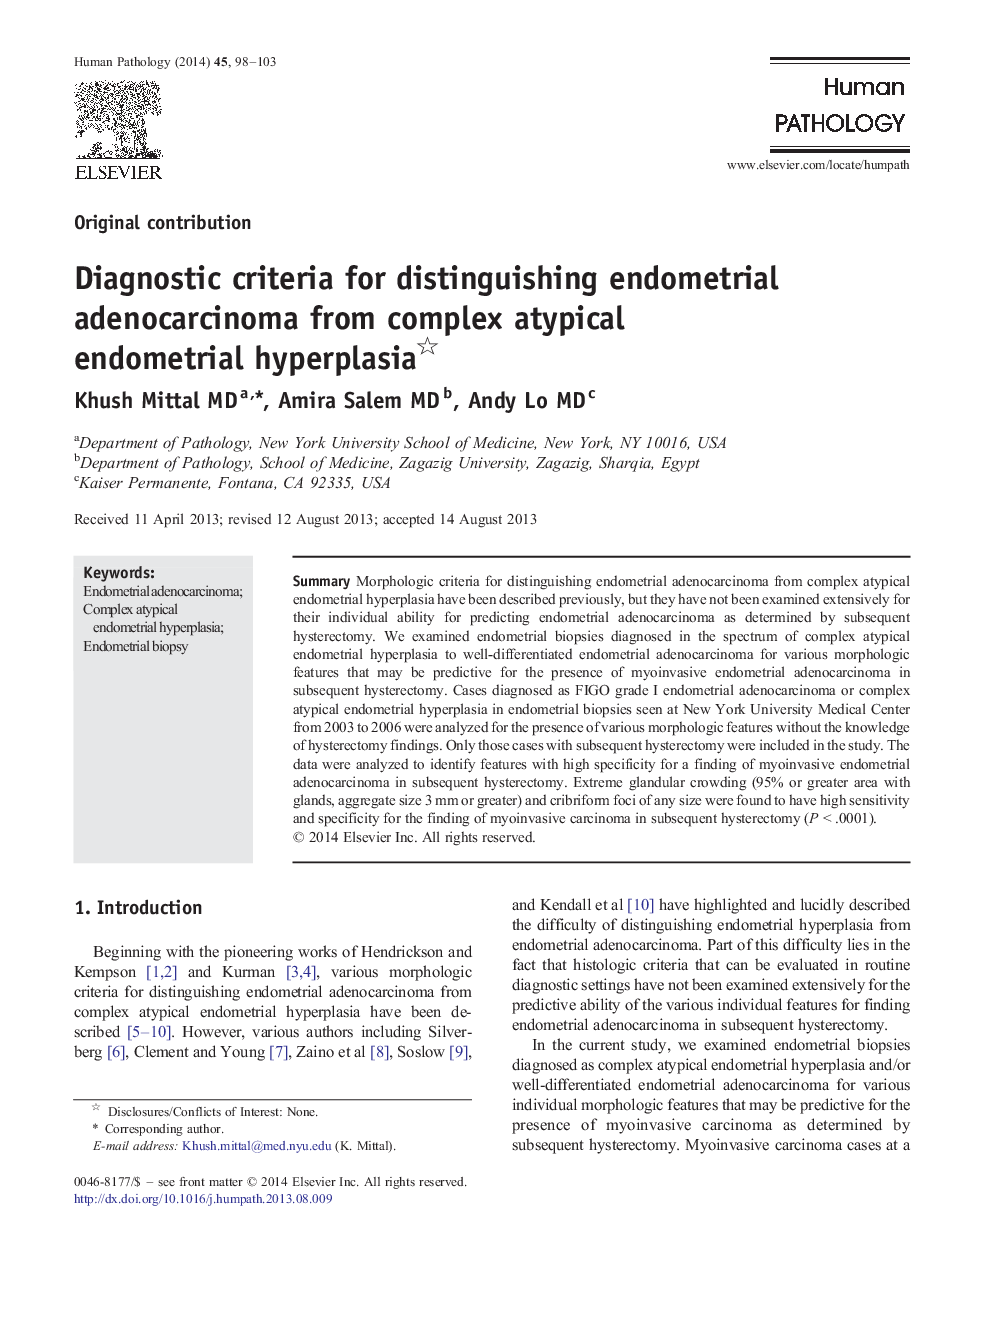 Diagnostic criteria for distinguishing endometrial adenocarcinoma from complex atypical endometrial hyperplasia 